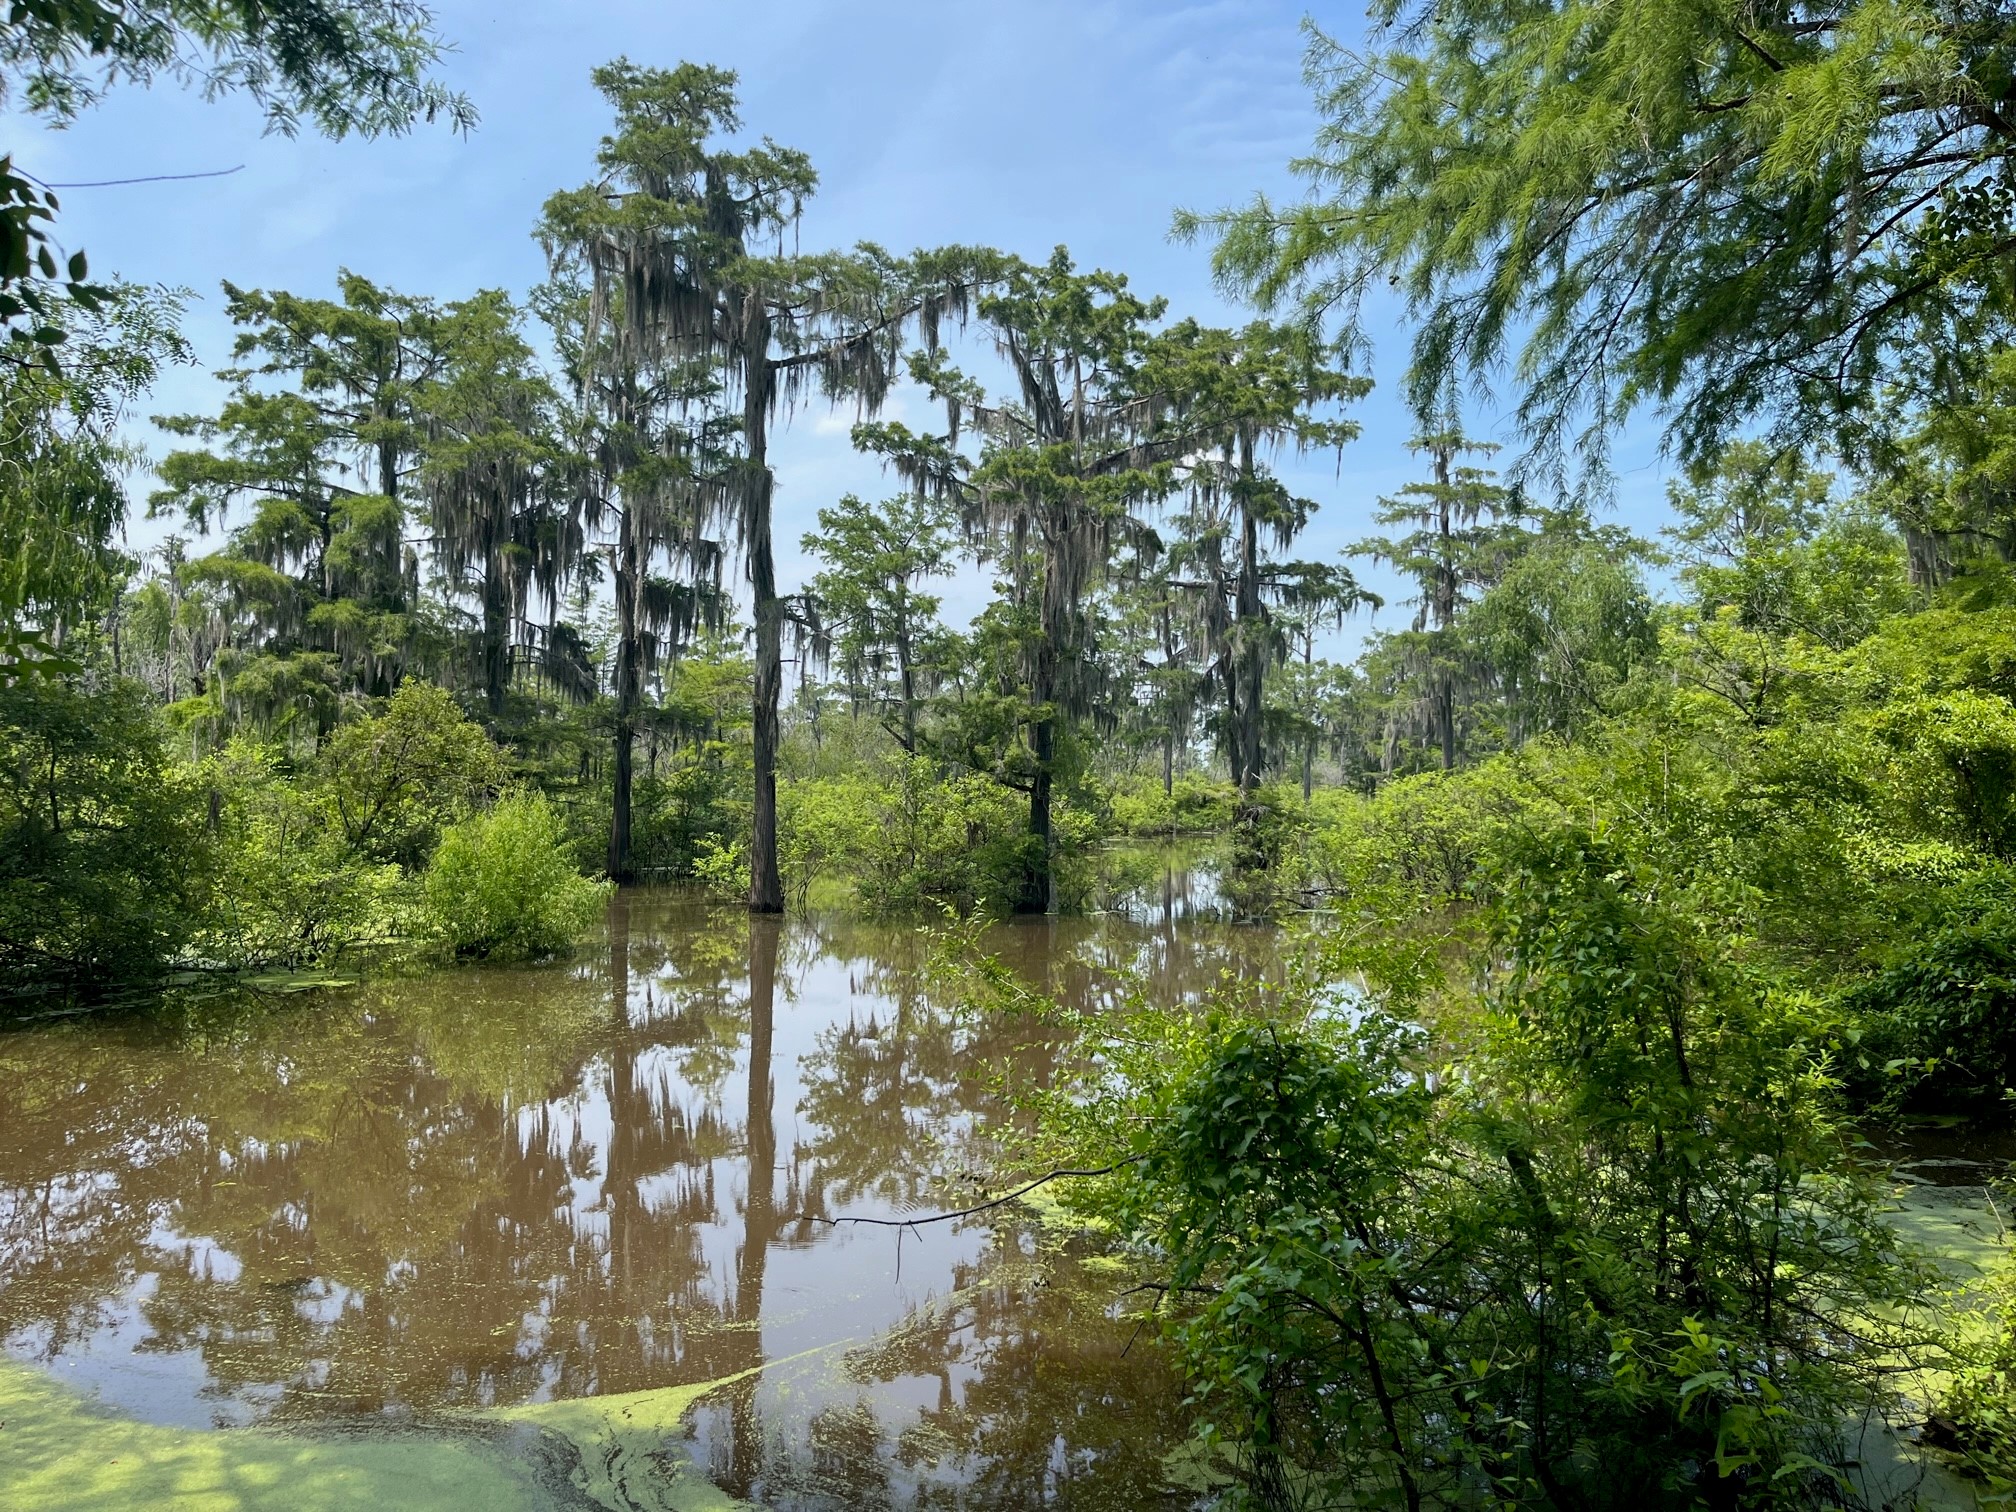 Mississippi Alluvial Valley Awarded $3 million for Wetland Habitat